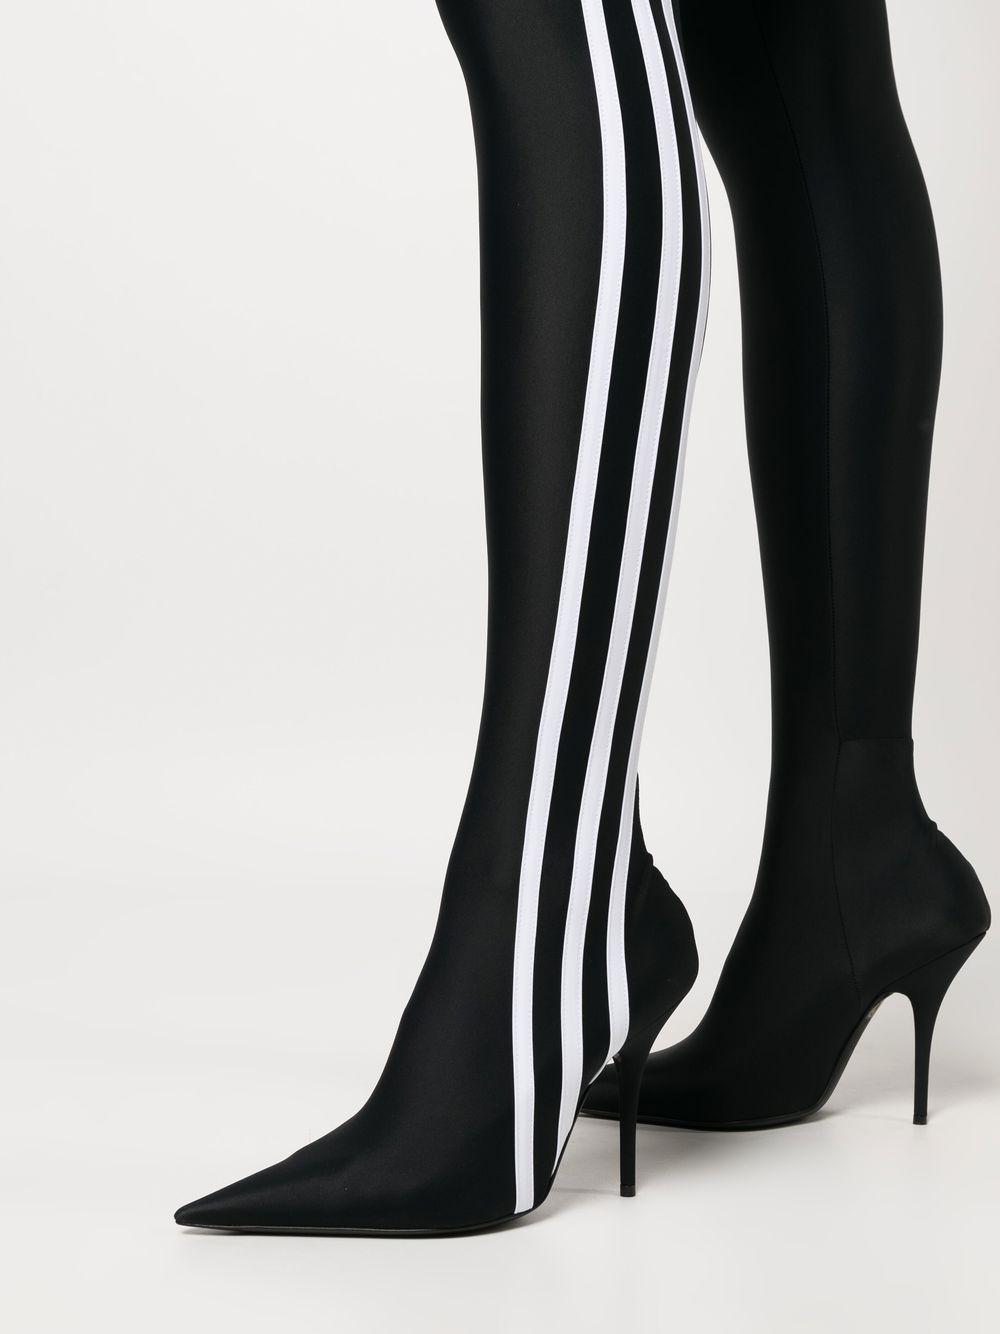 Balenciaga X Adidas Pantalegging 90mm Boots in Black | Lyst